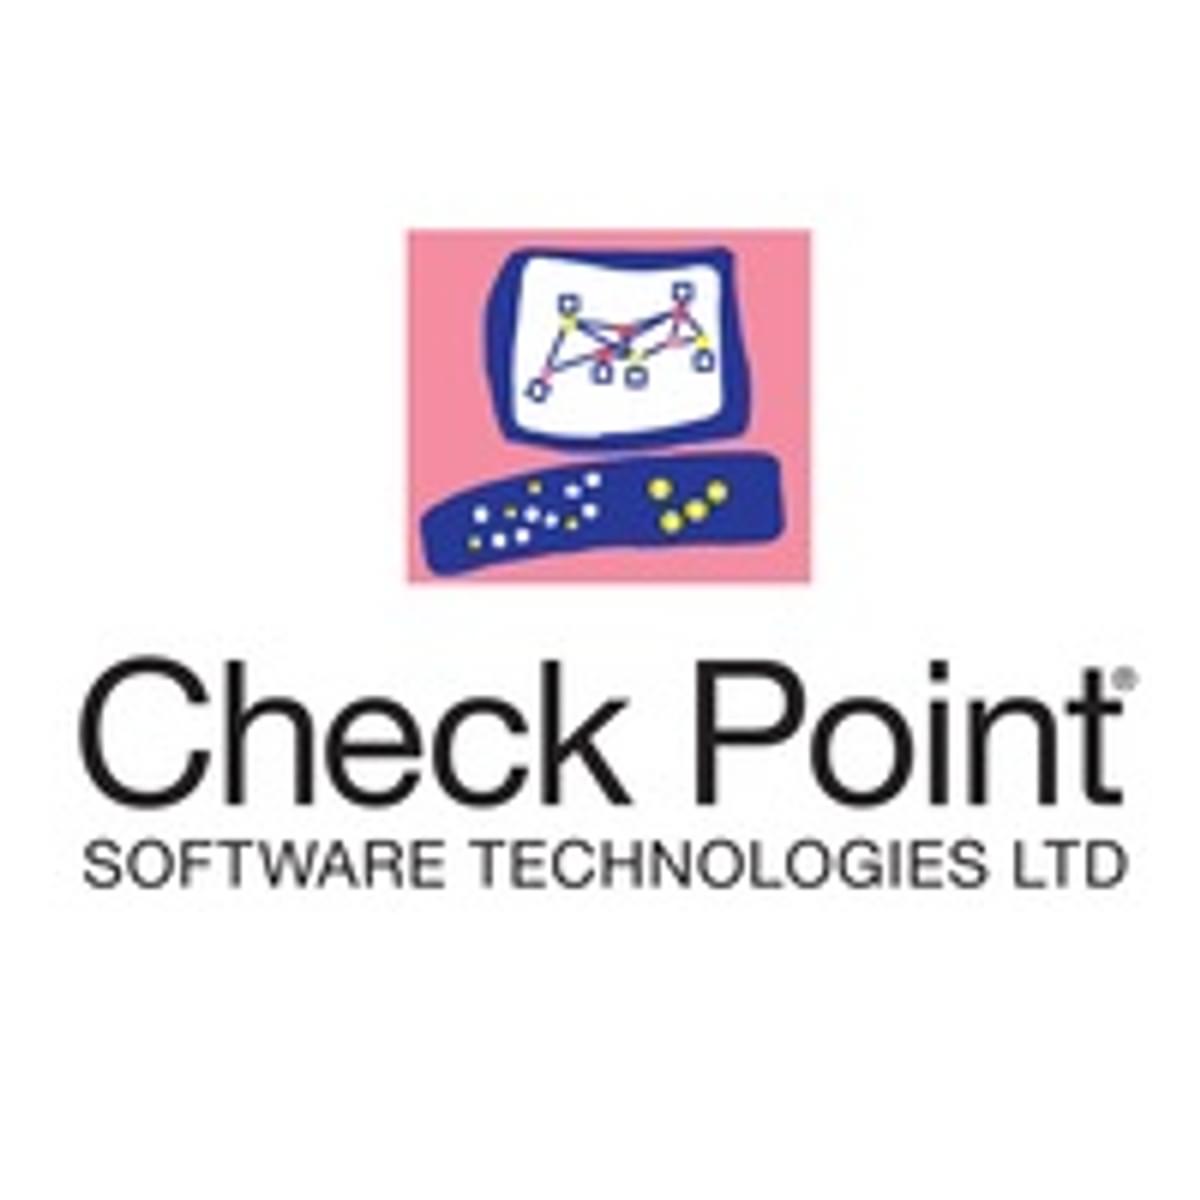 Check Point Software voegt ondersteuning Alibaba Cloud toe aan Unified Cloud Native Platform image